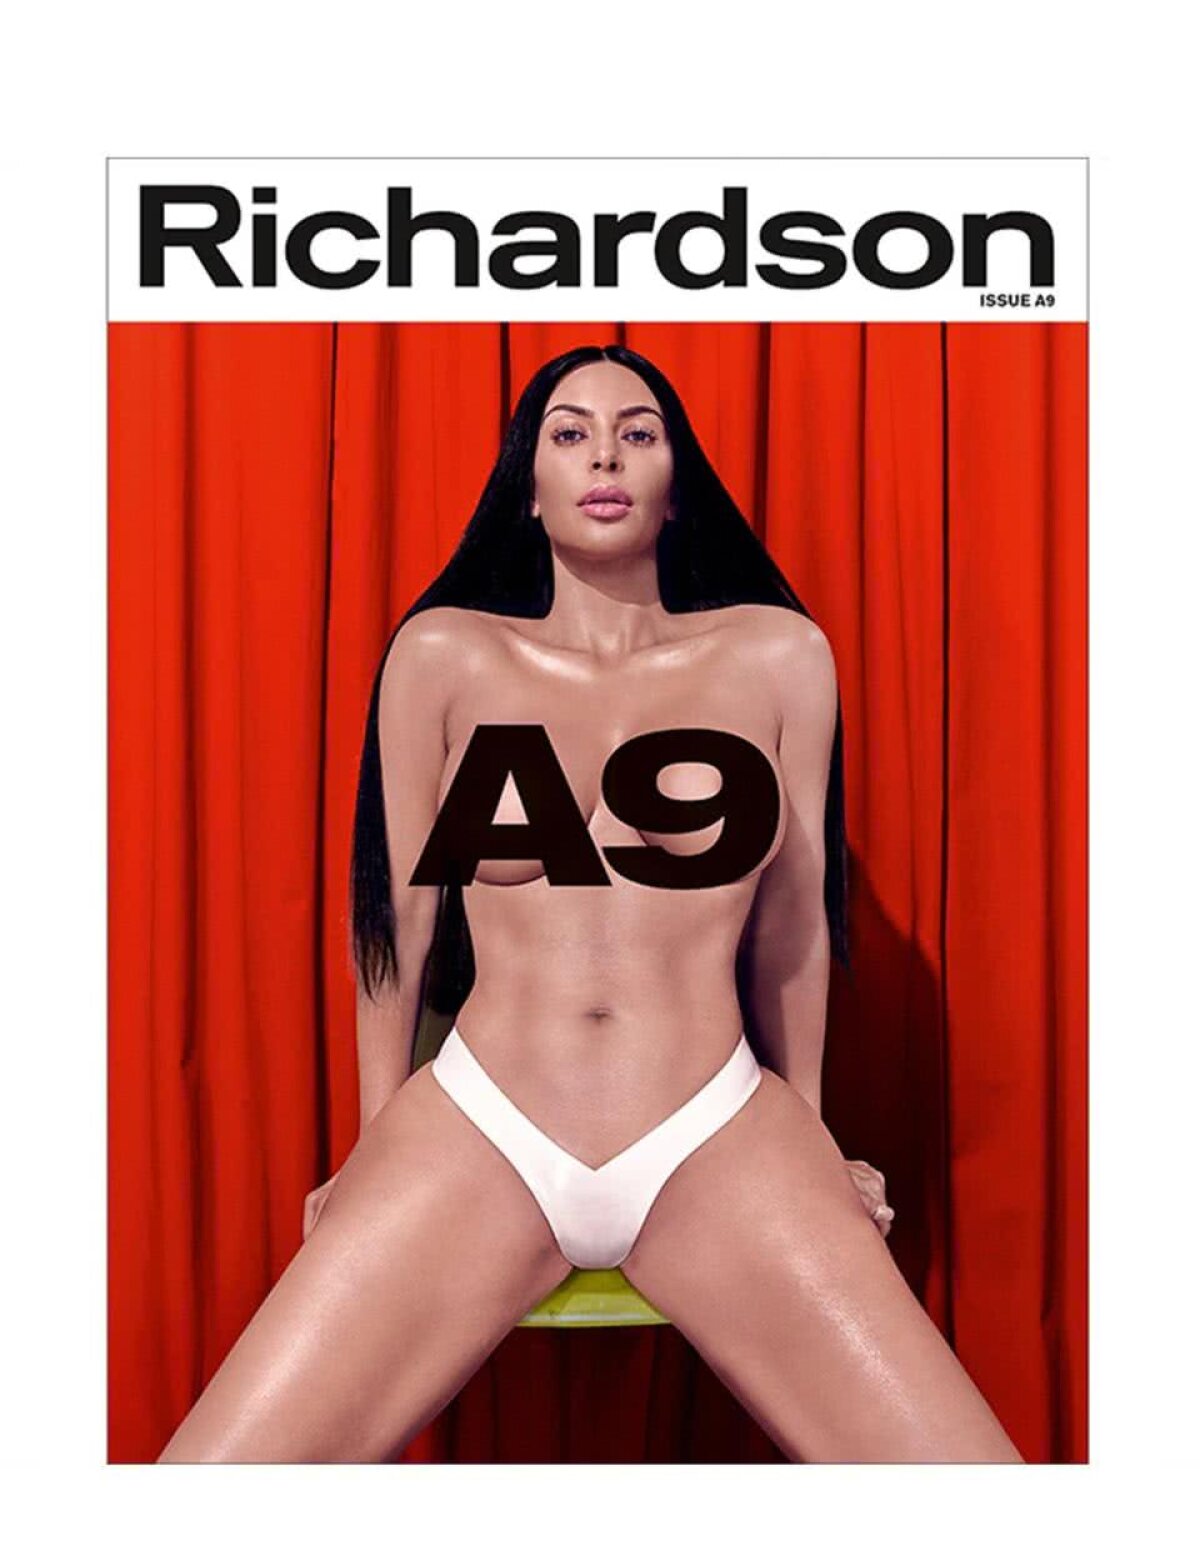 FOTO Kim Kardashian șochează cu o nouă fotografie topless